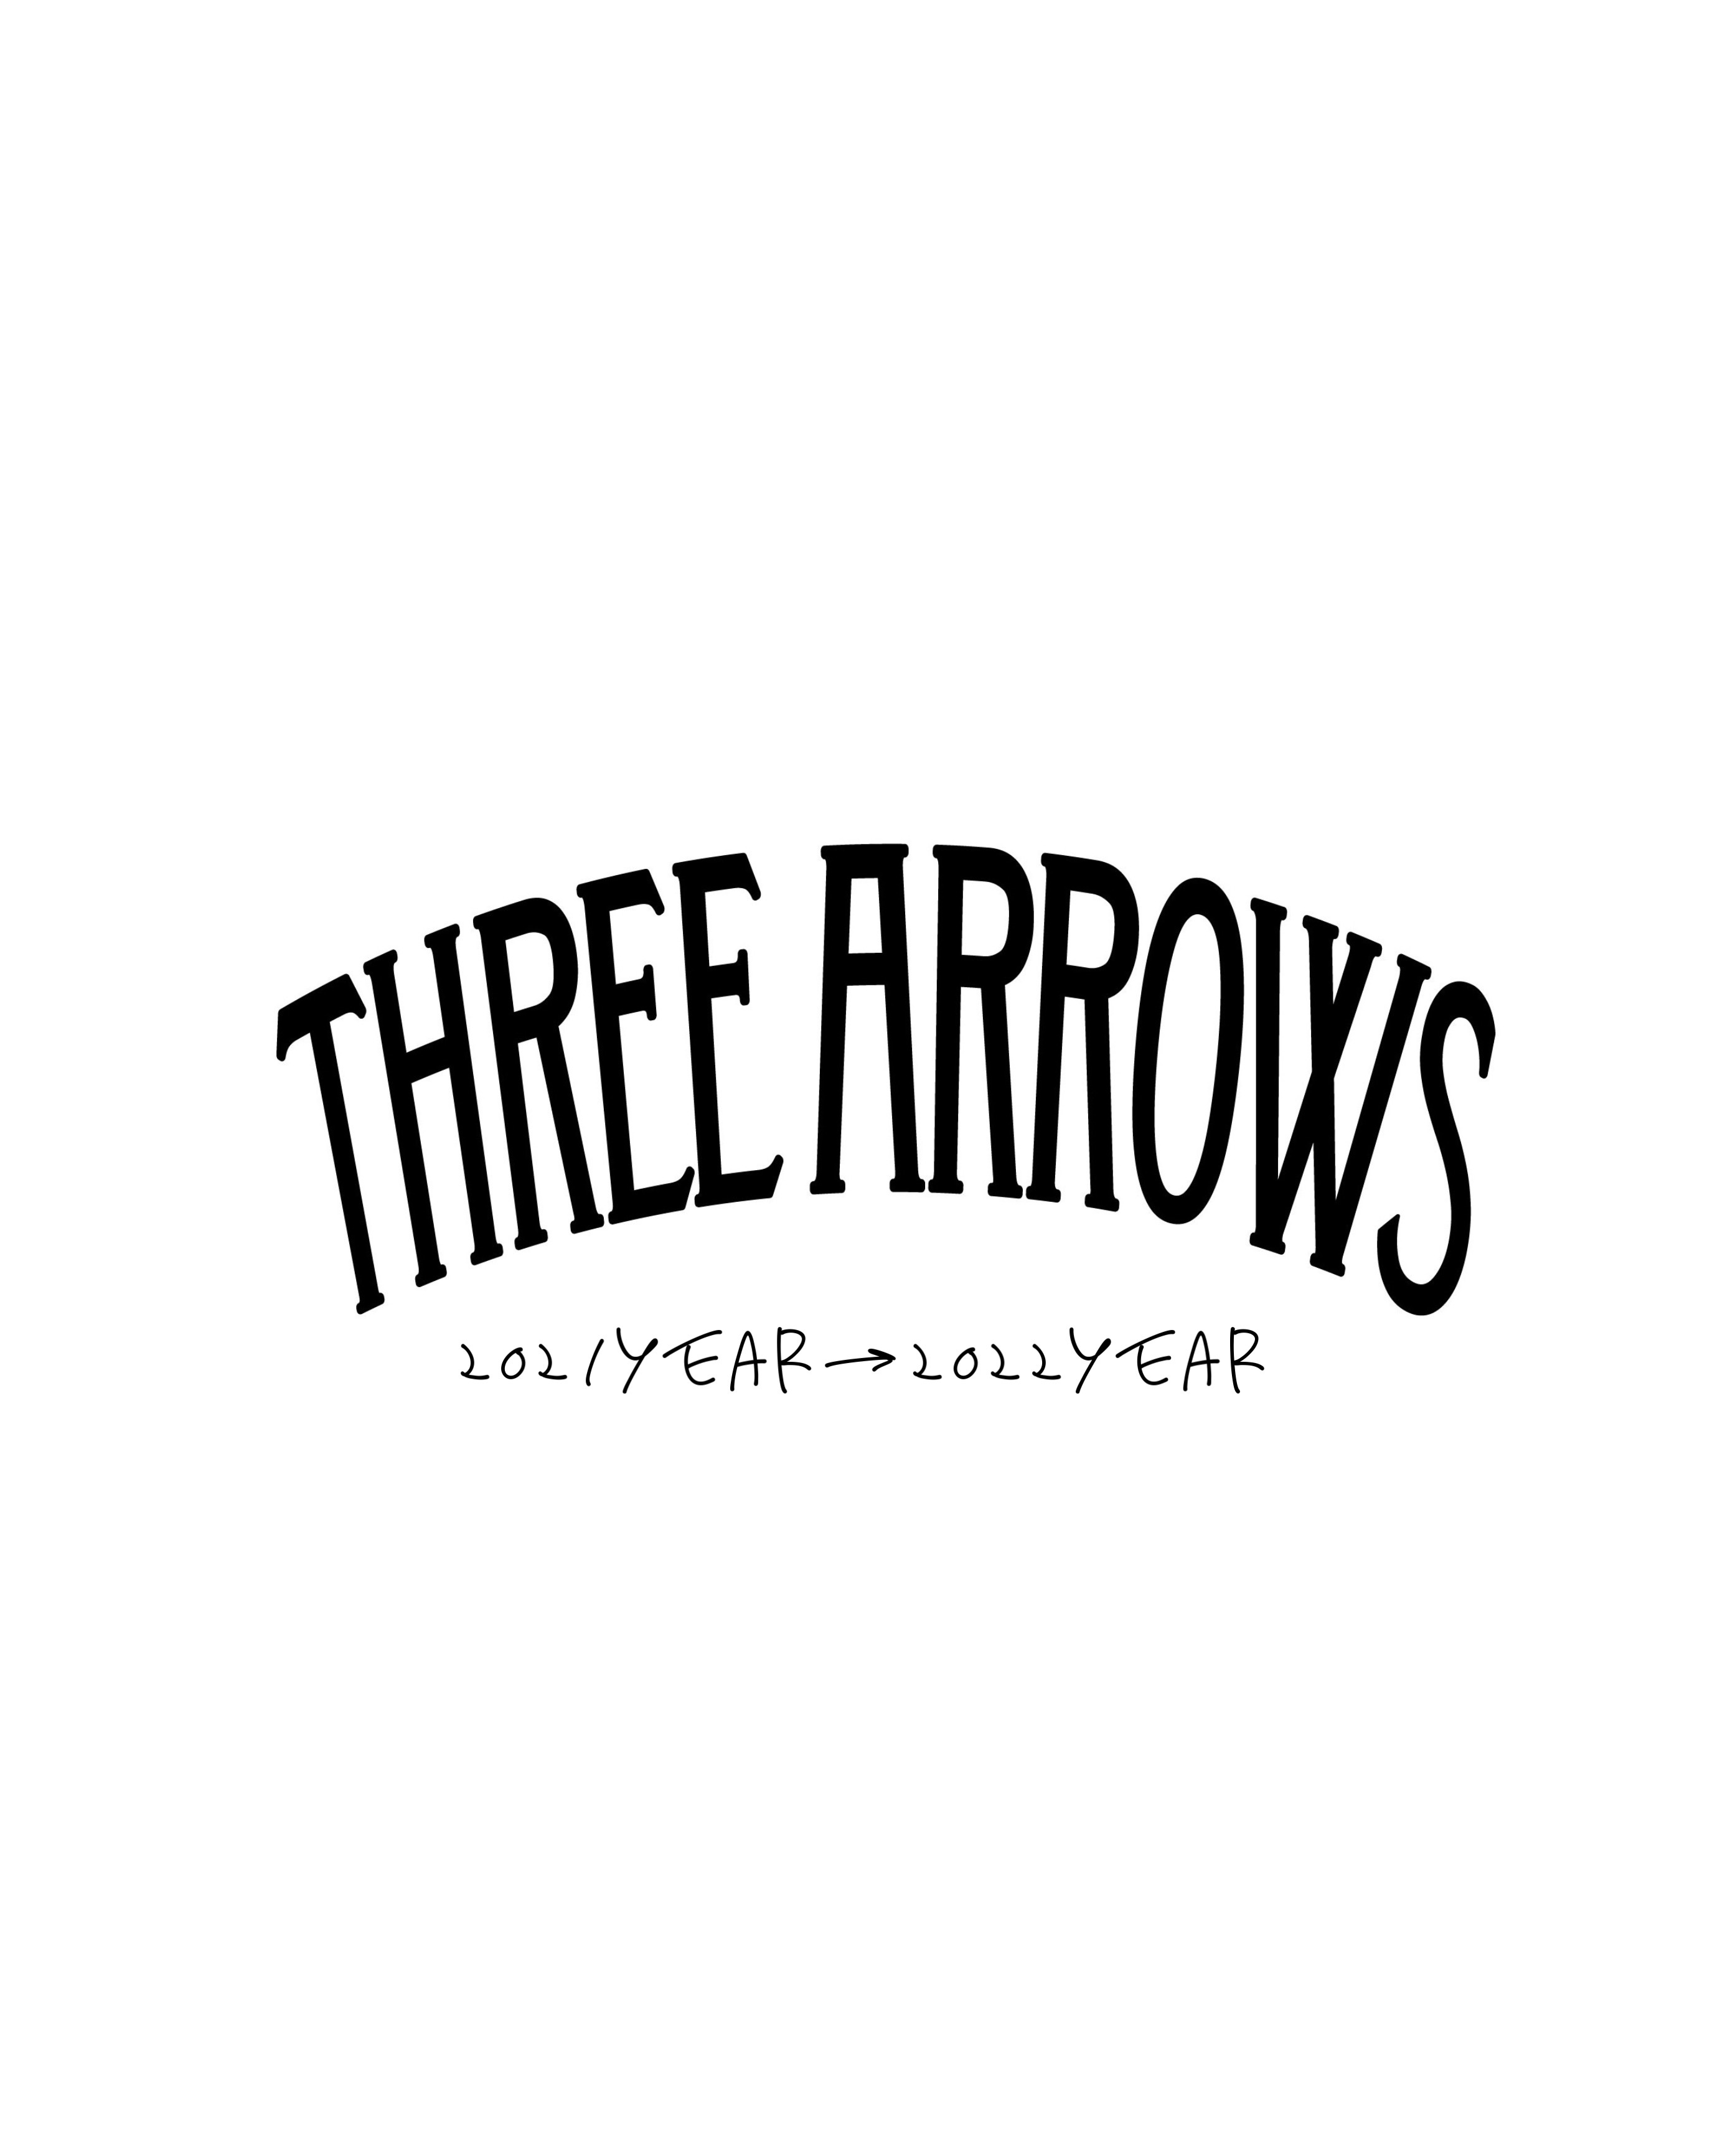 ThreeArrows 紹介画像1